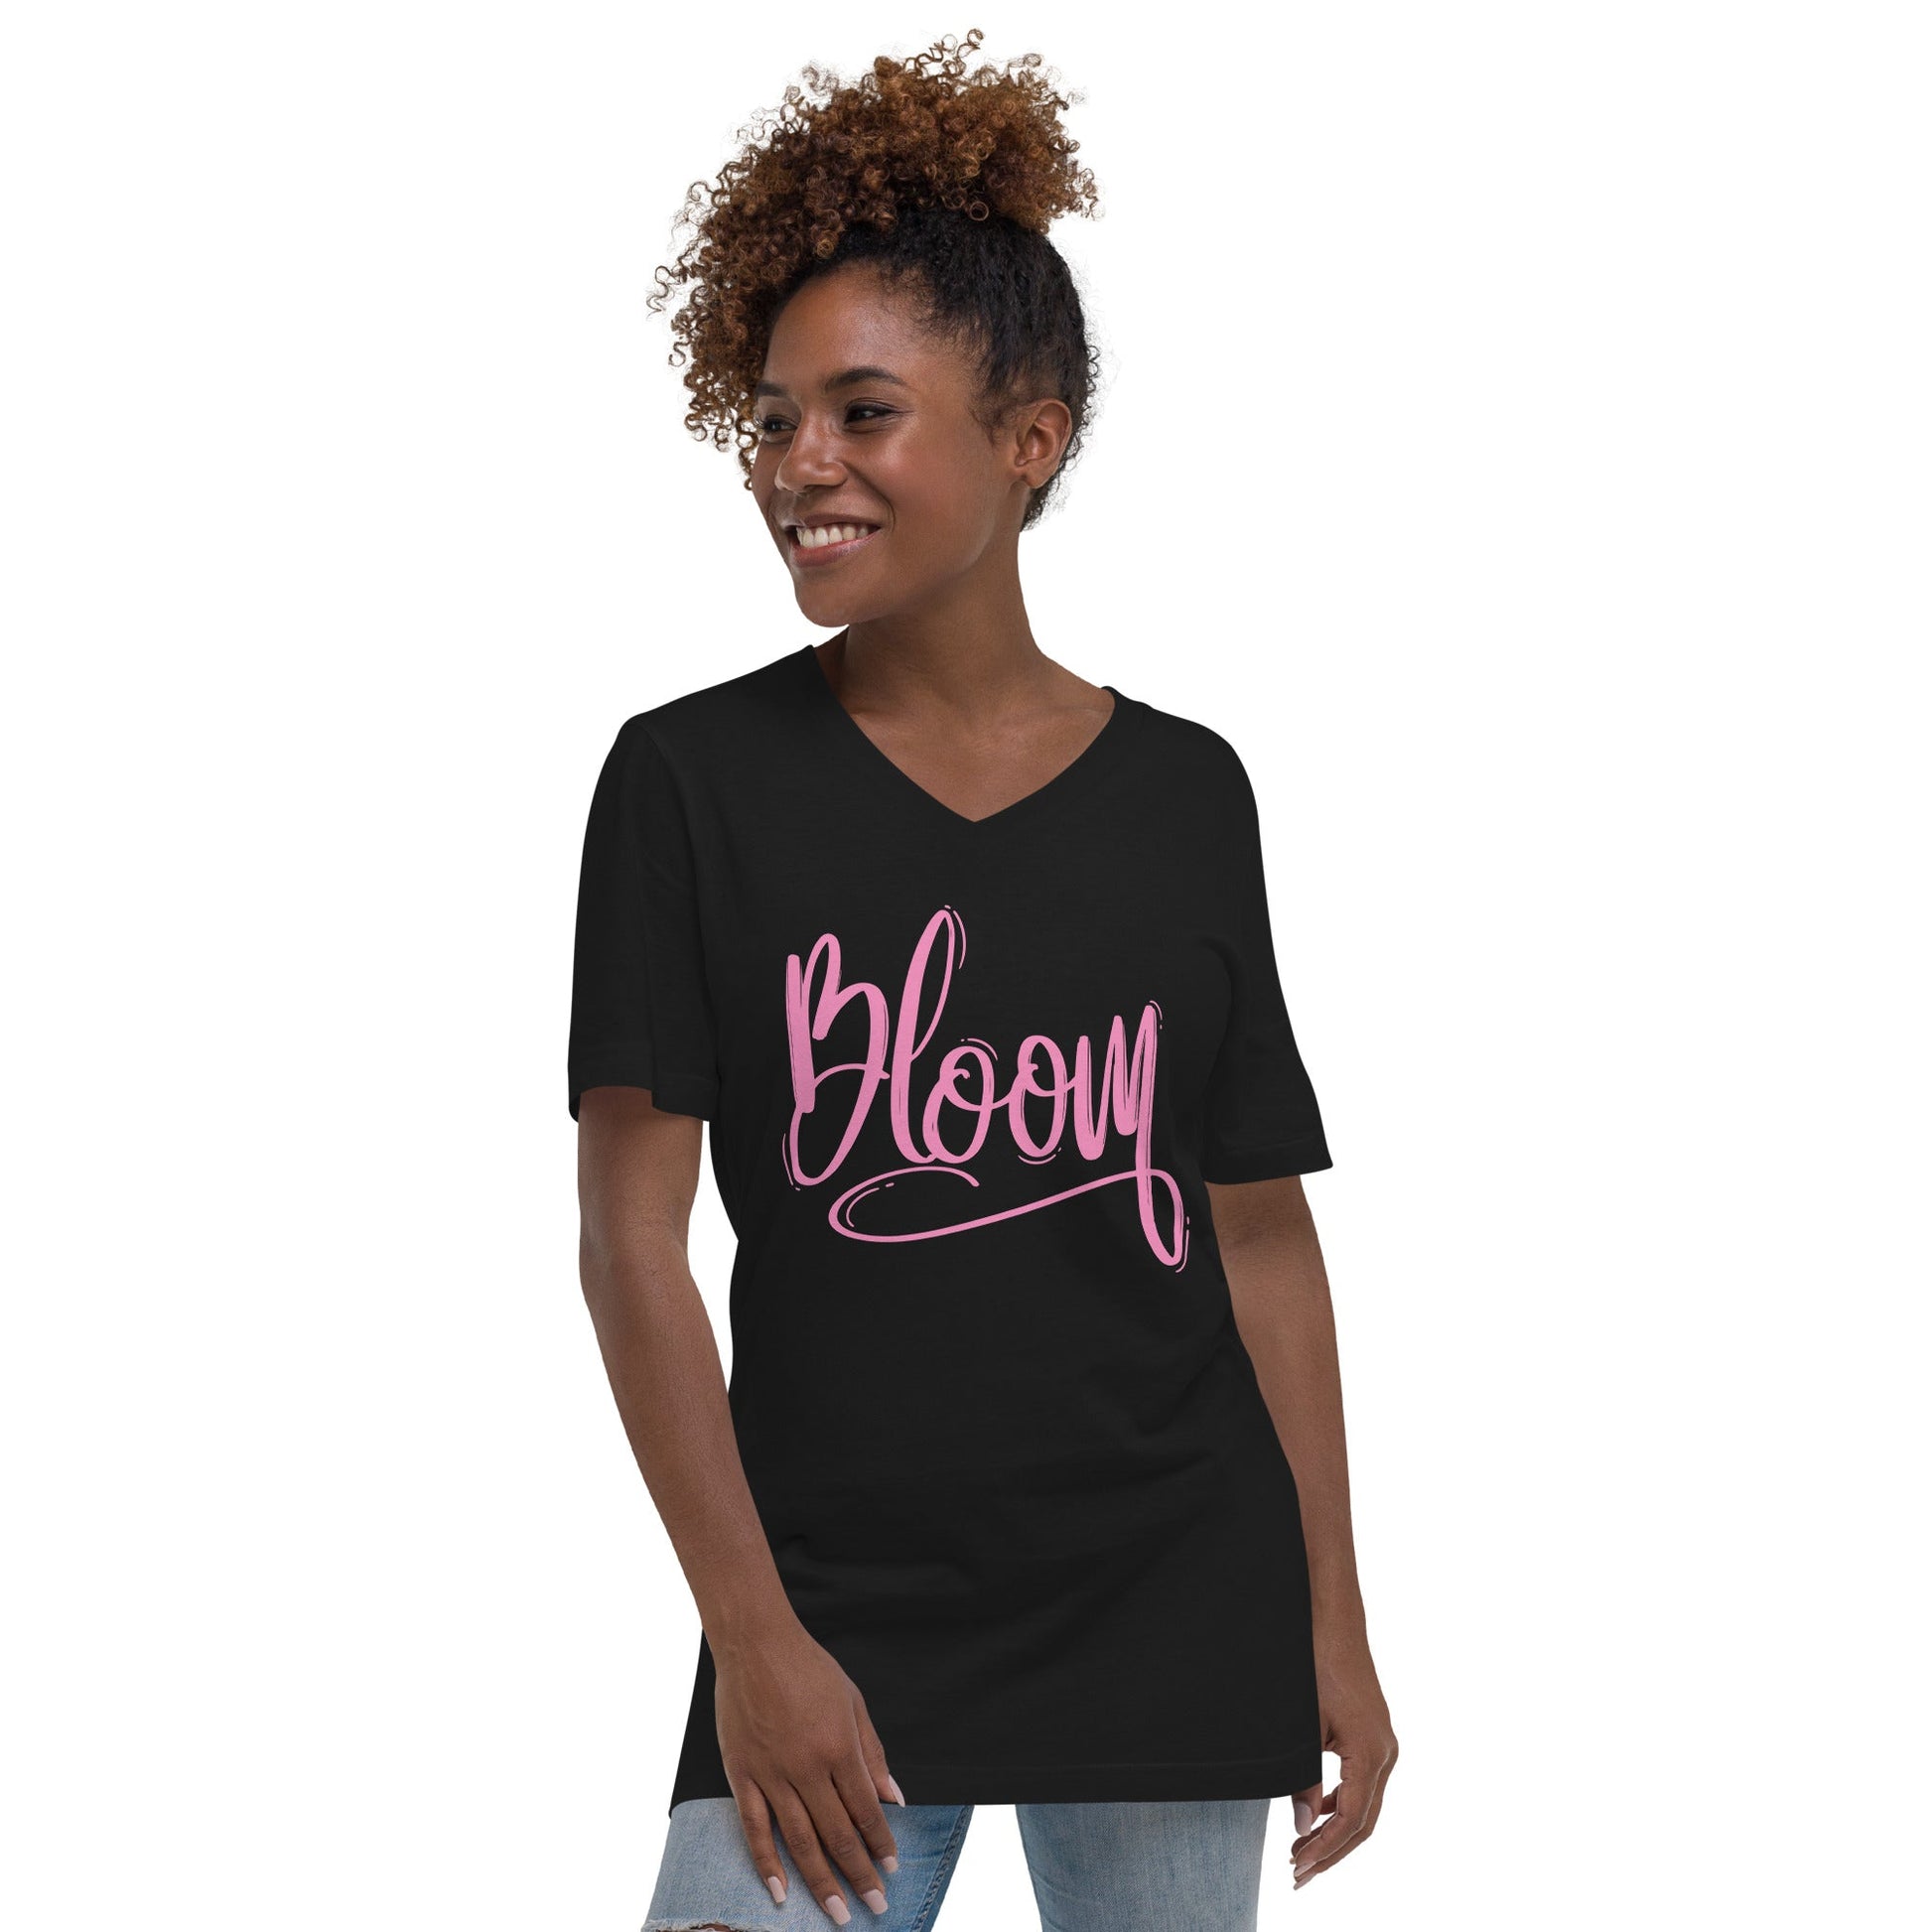 Bloom | Unisex Short Sleeve V-Neck T-Shirt